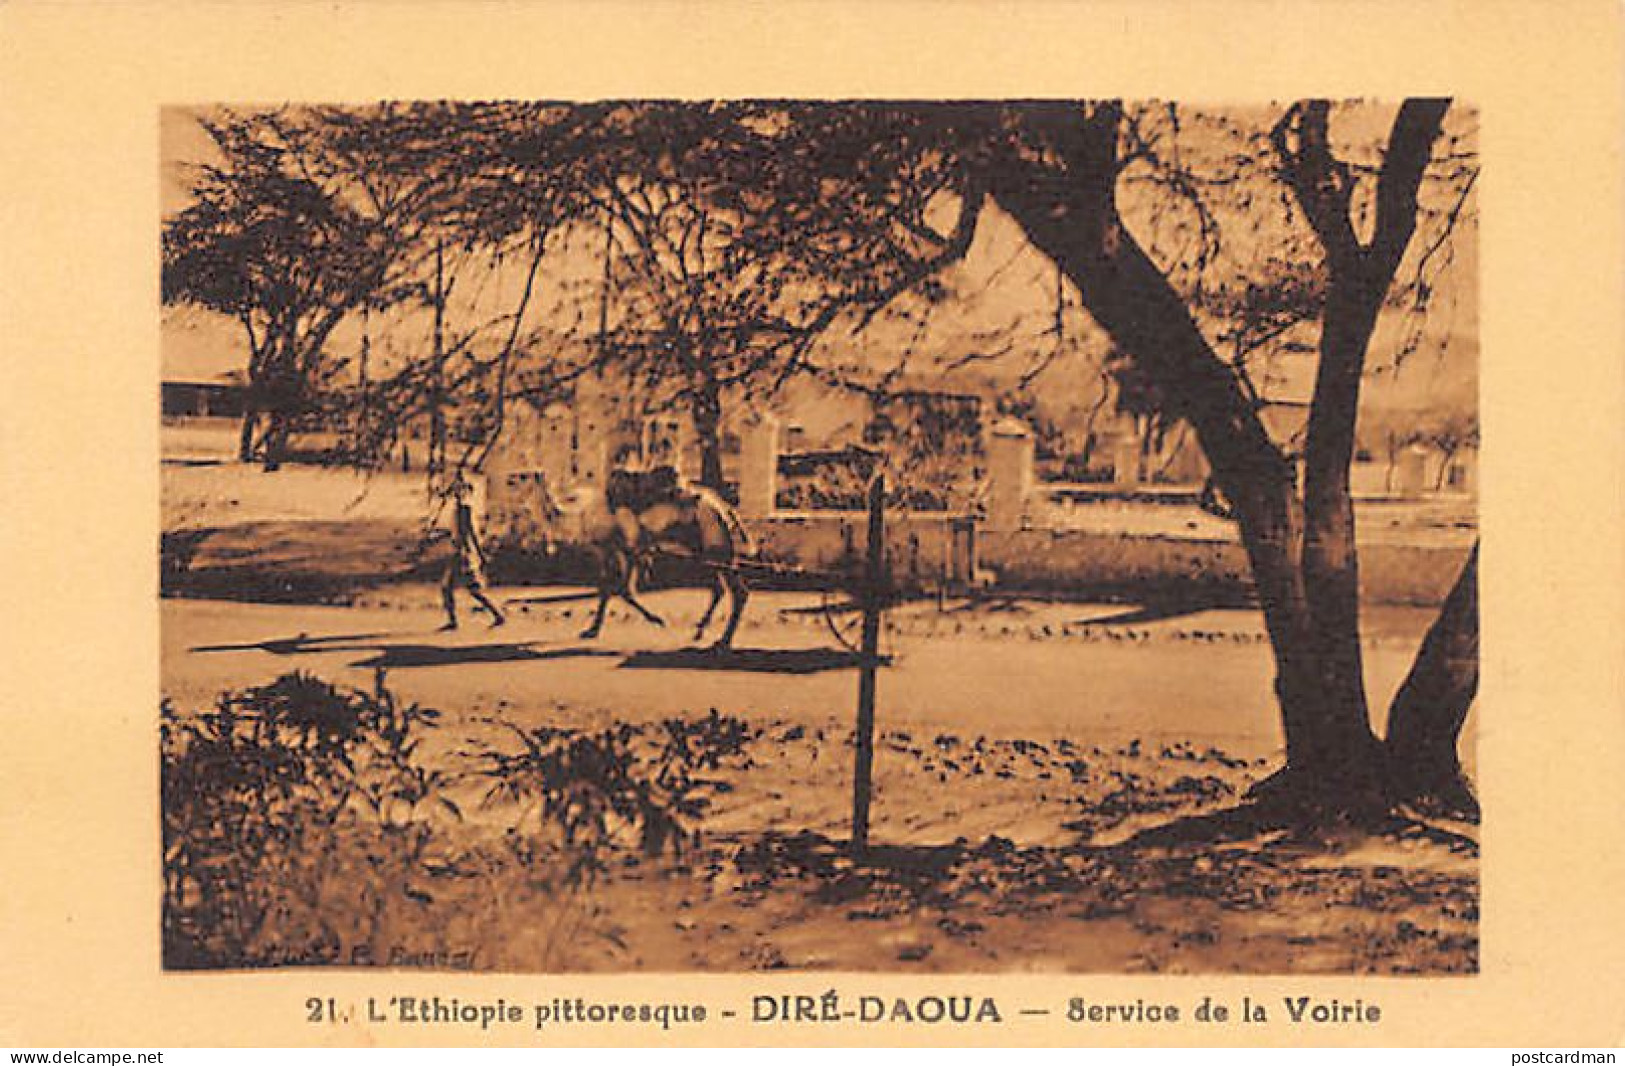 Ethiopia - DIRE DAWA - Roads Department - Publ. Printing Works Of The Dire Dawa Catholic Mission - Photographer P. Baudr - Etiopía